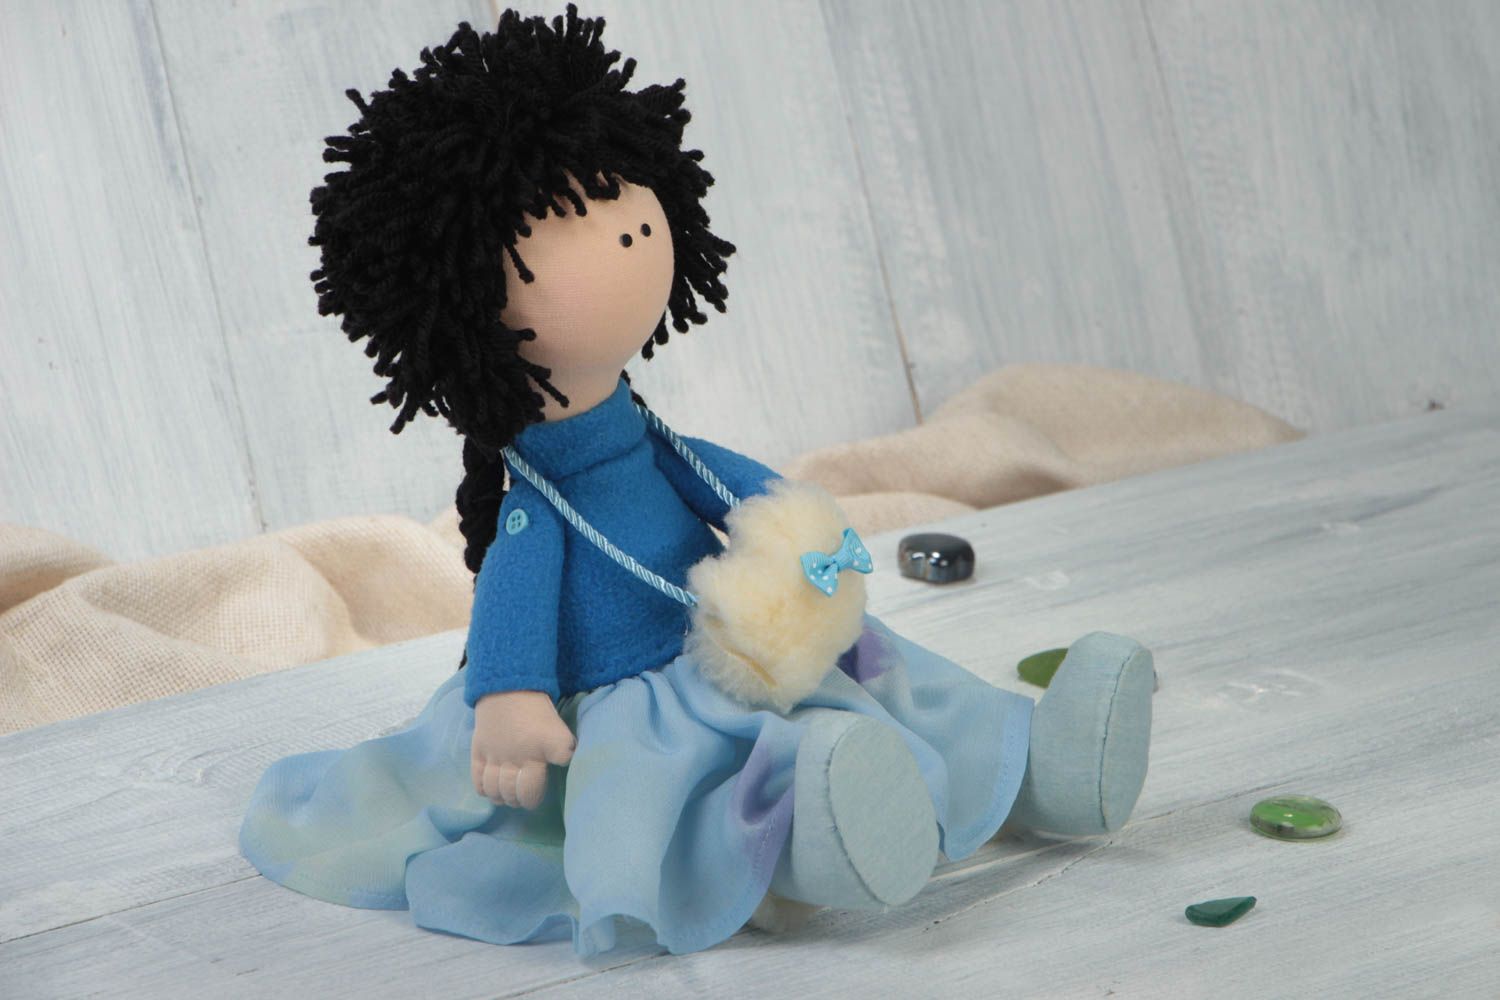 Handmade cute soft toy textile designer doll unusual stylish interior decor photo 1